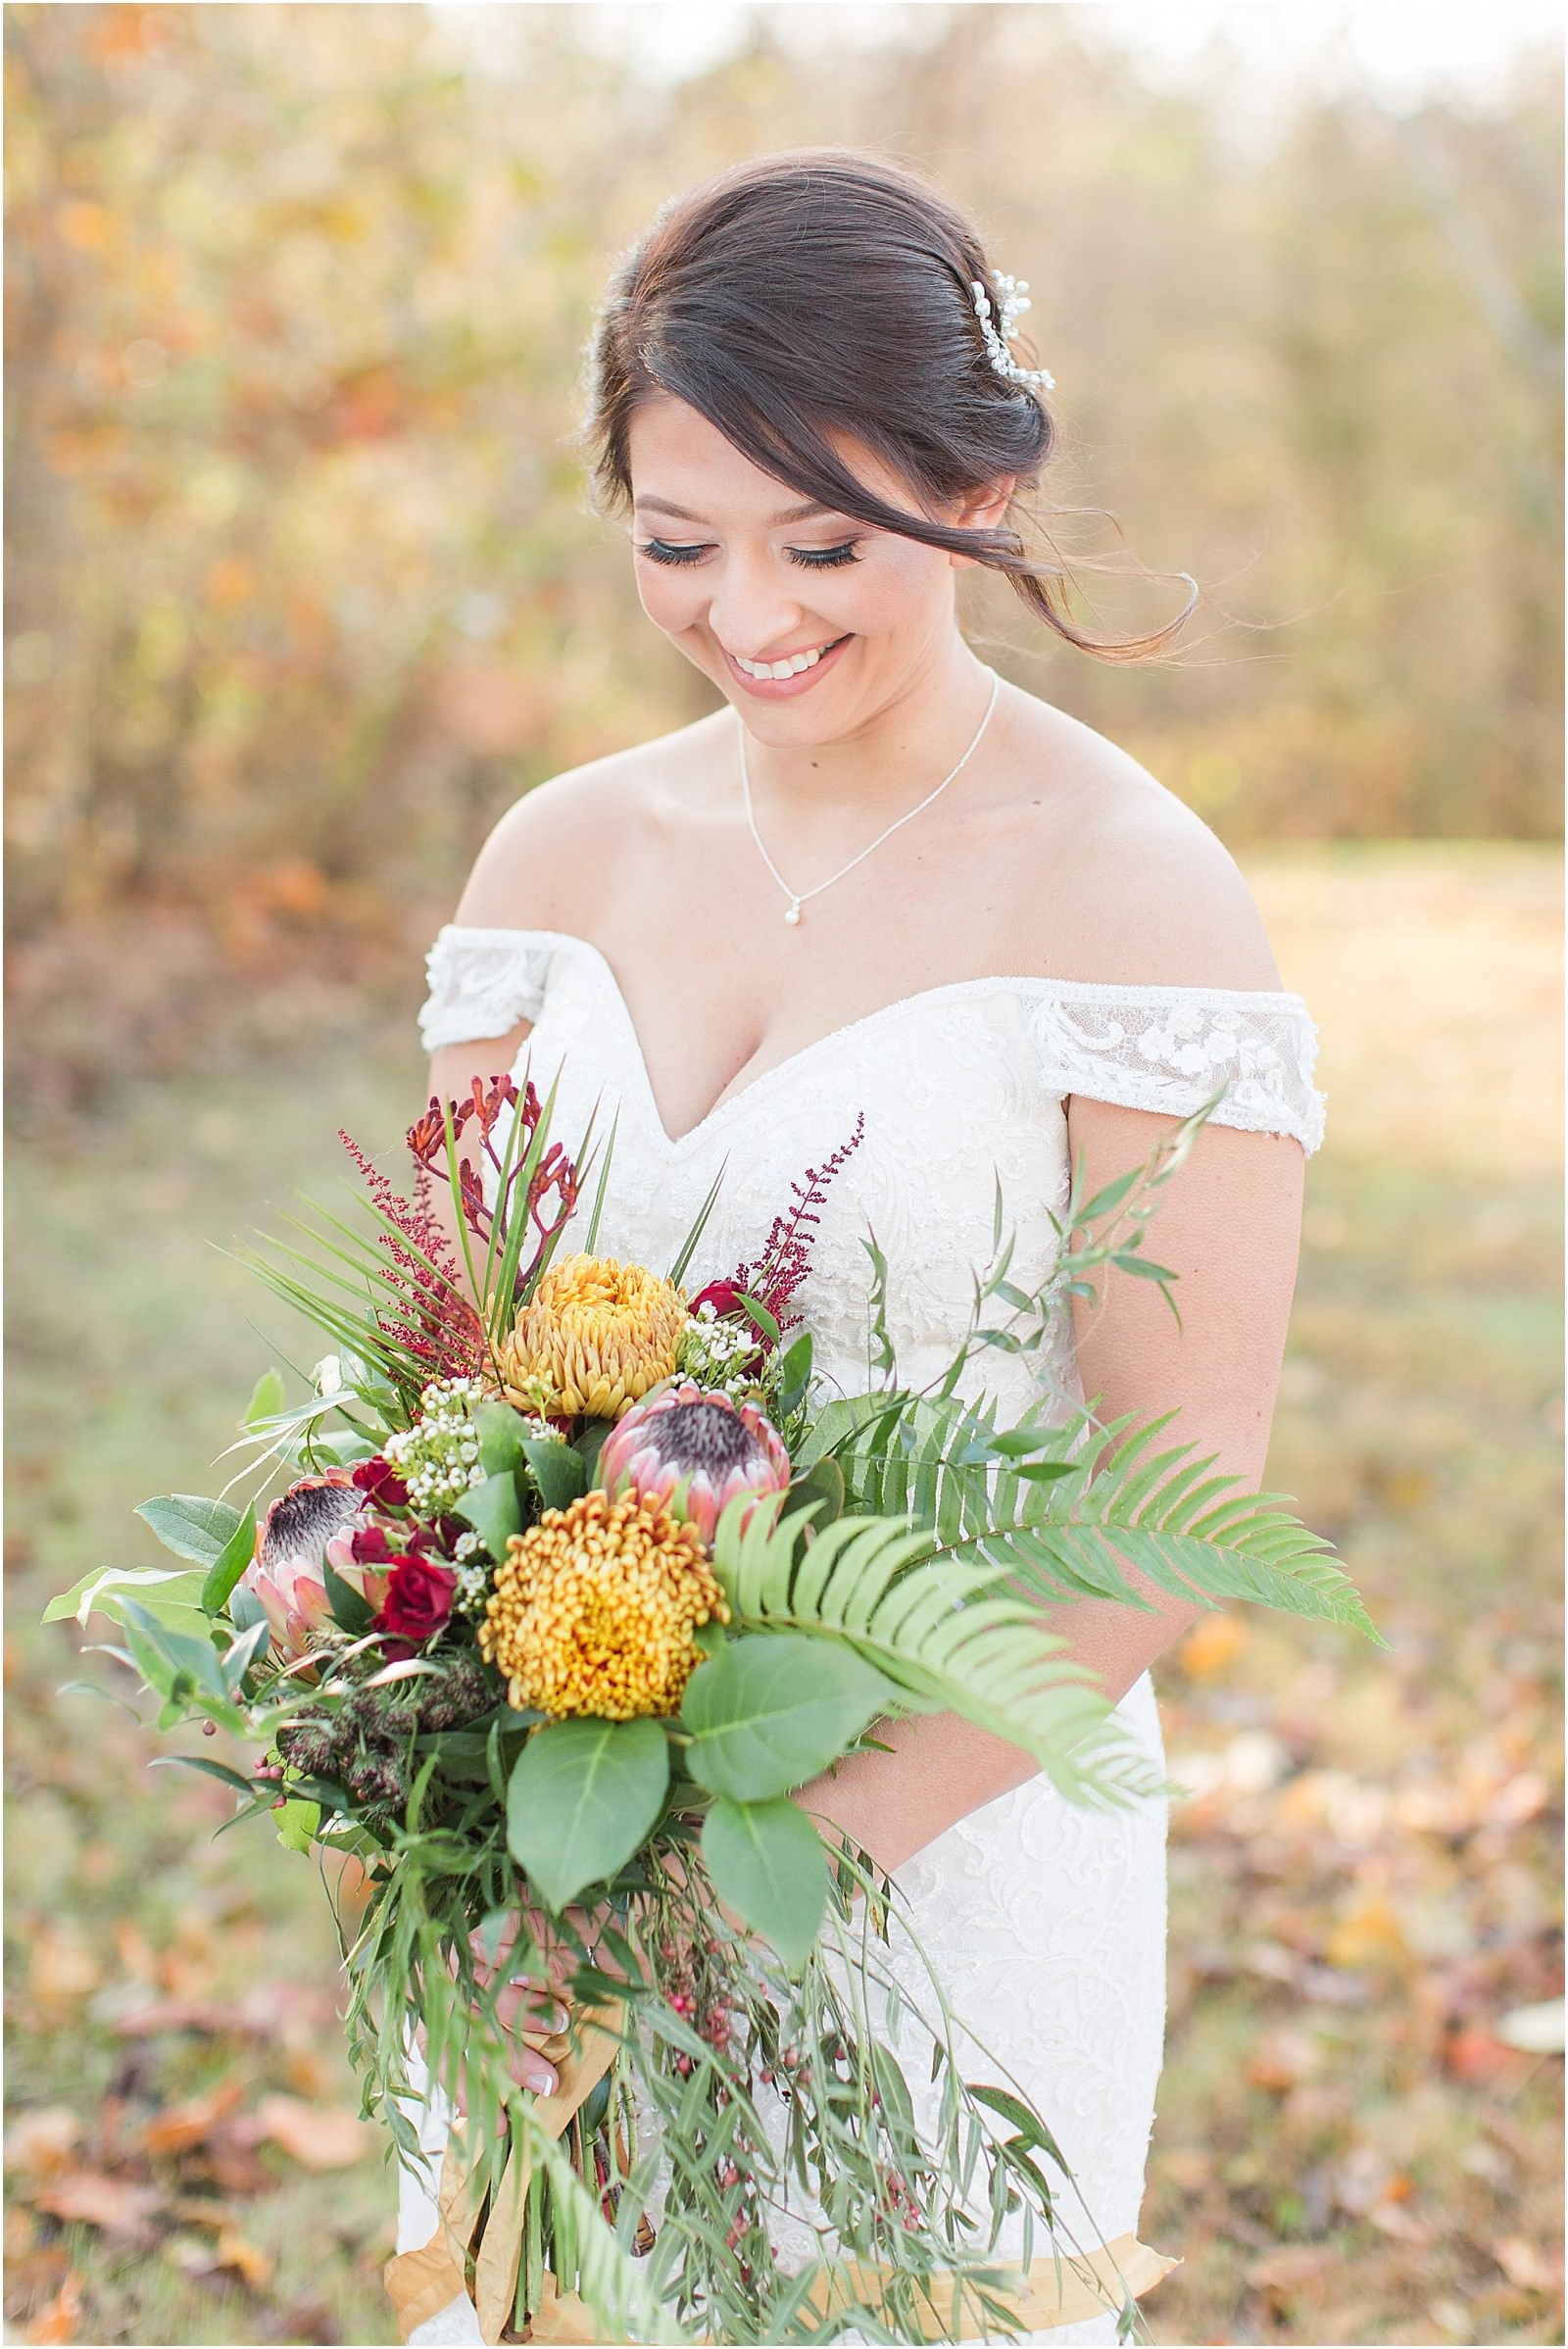 Walker and Alyssa's intimate fall wedding in Southern Indiana. | Wedding Photography | The Corner House Wedding | Southern Indiana Wedding | #fallwedding #intimatewedding | 051.jpg